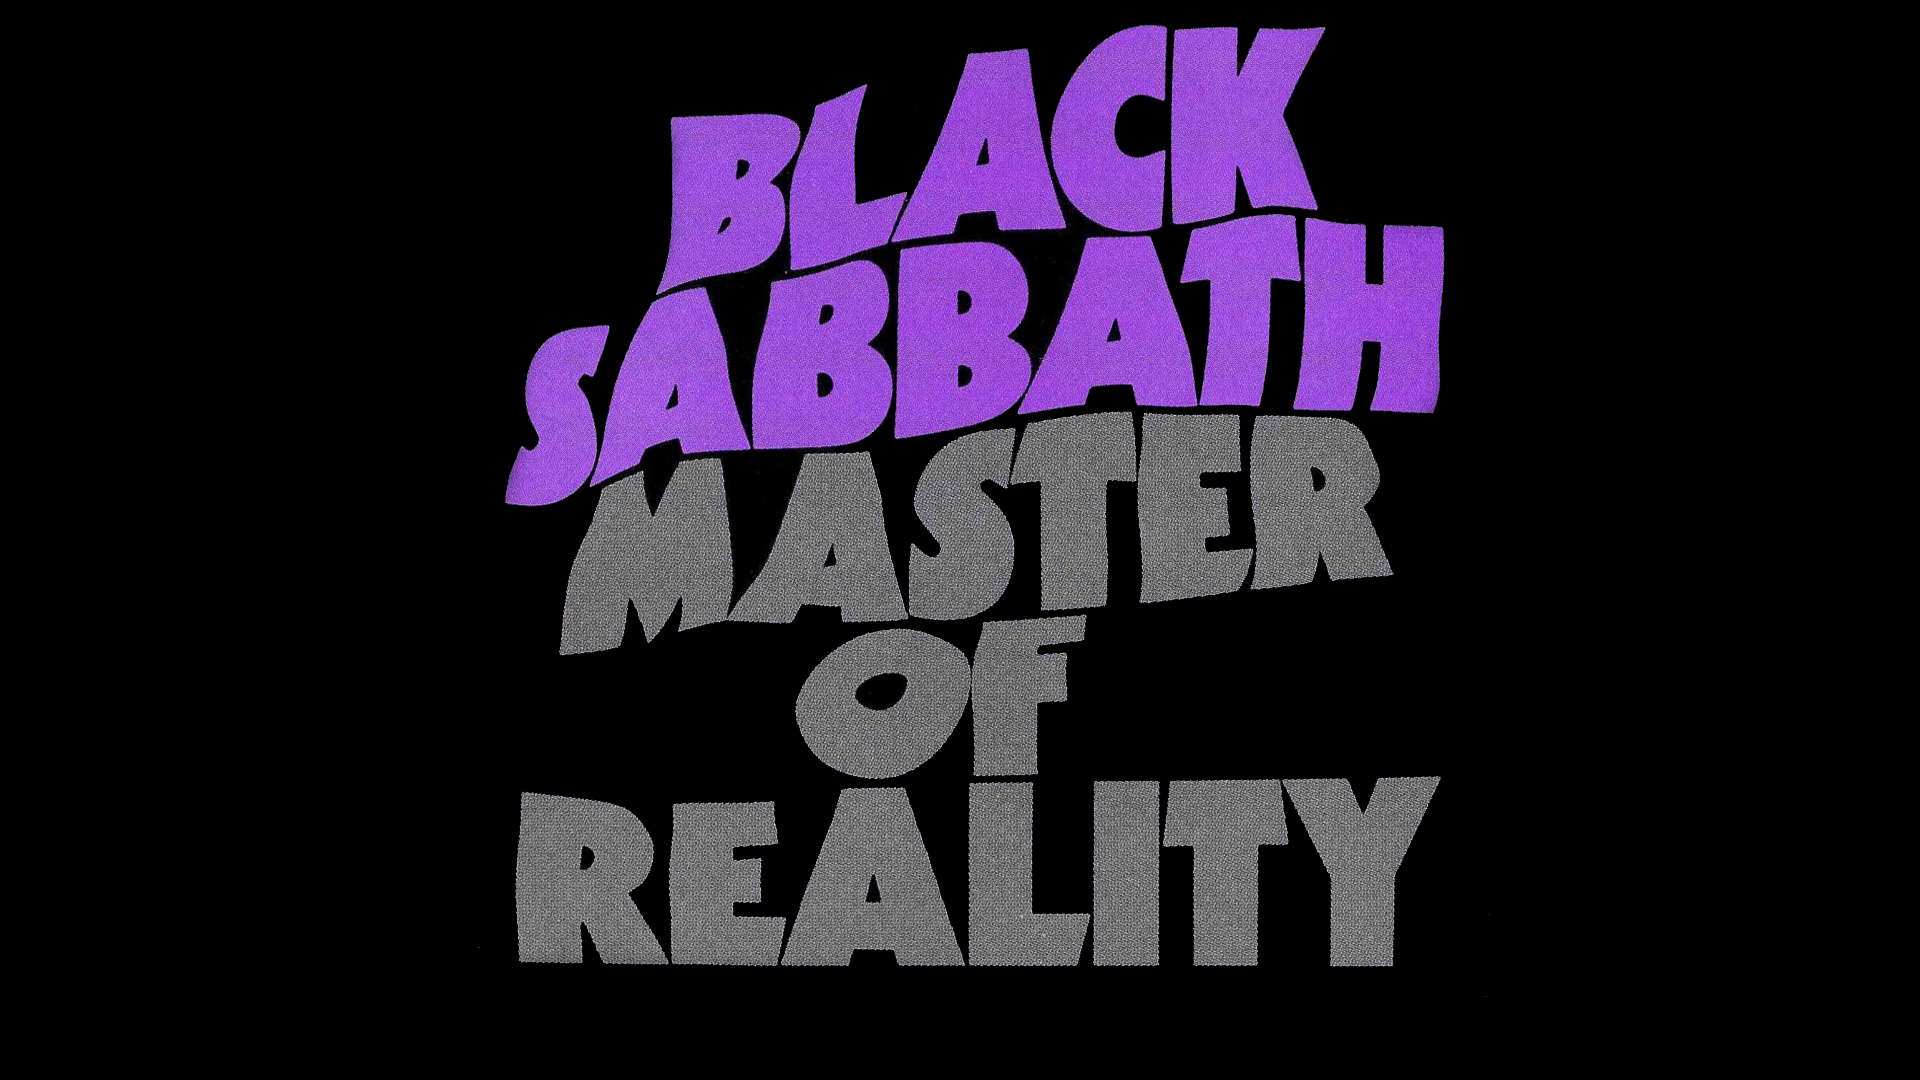 Black Sabbath Wallpaper - Black Sabbath Master Of Reality , HD Wallpaper & Backgrounds